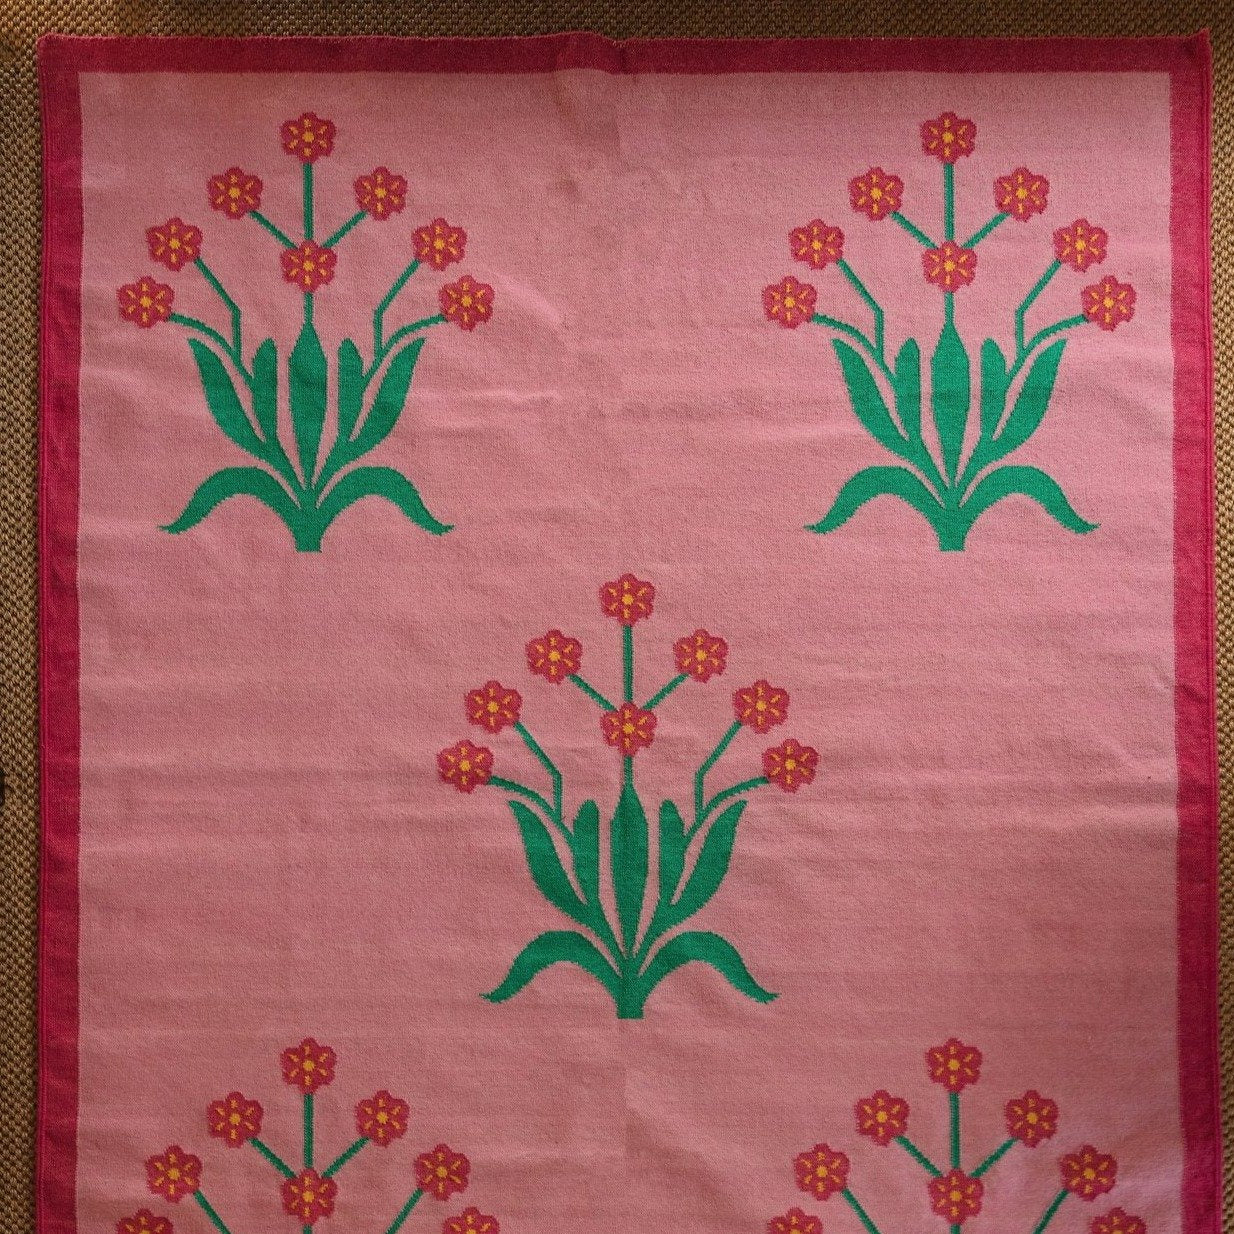 Chandigarh Flatweave Rug - Pink, Green & Yellow - 1.6 x 2.0m